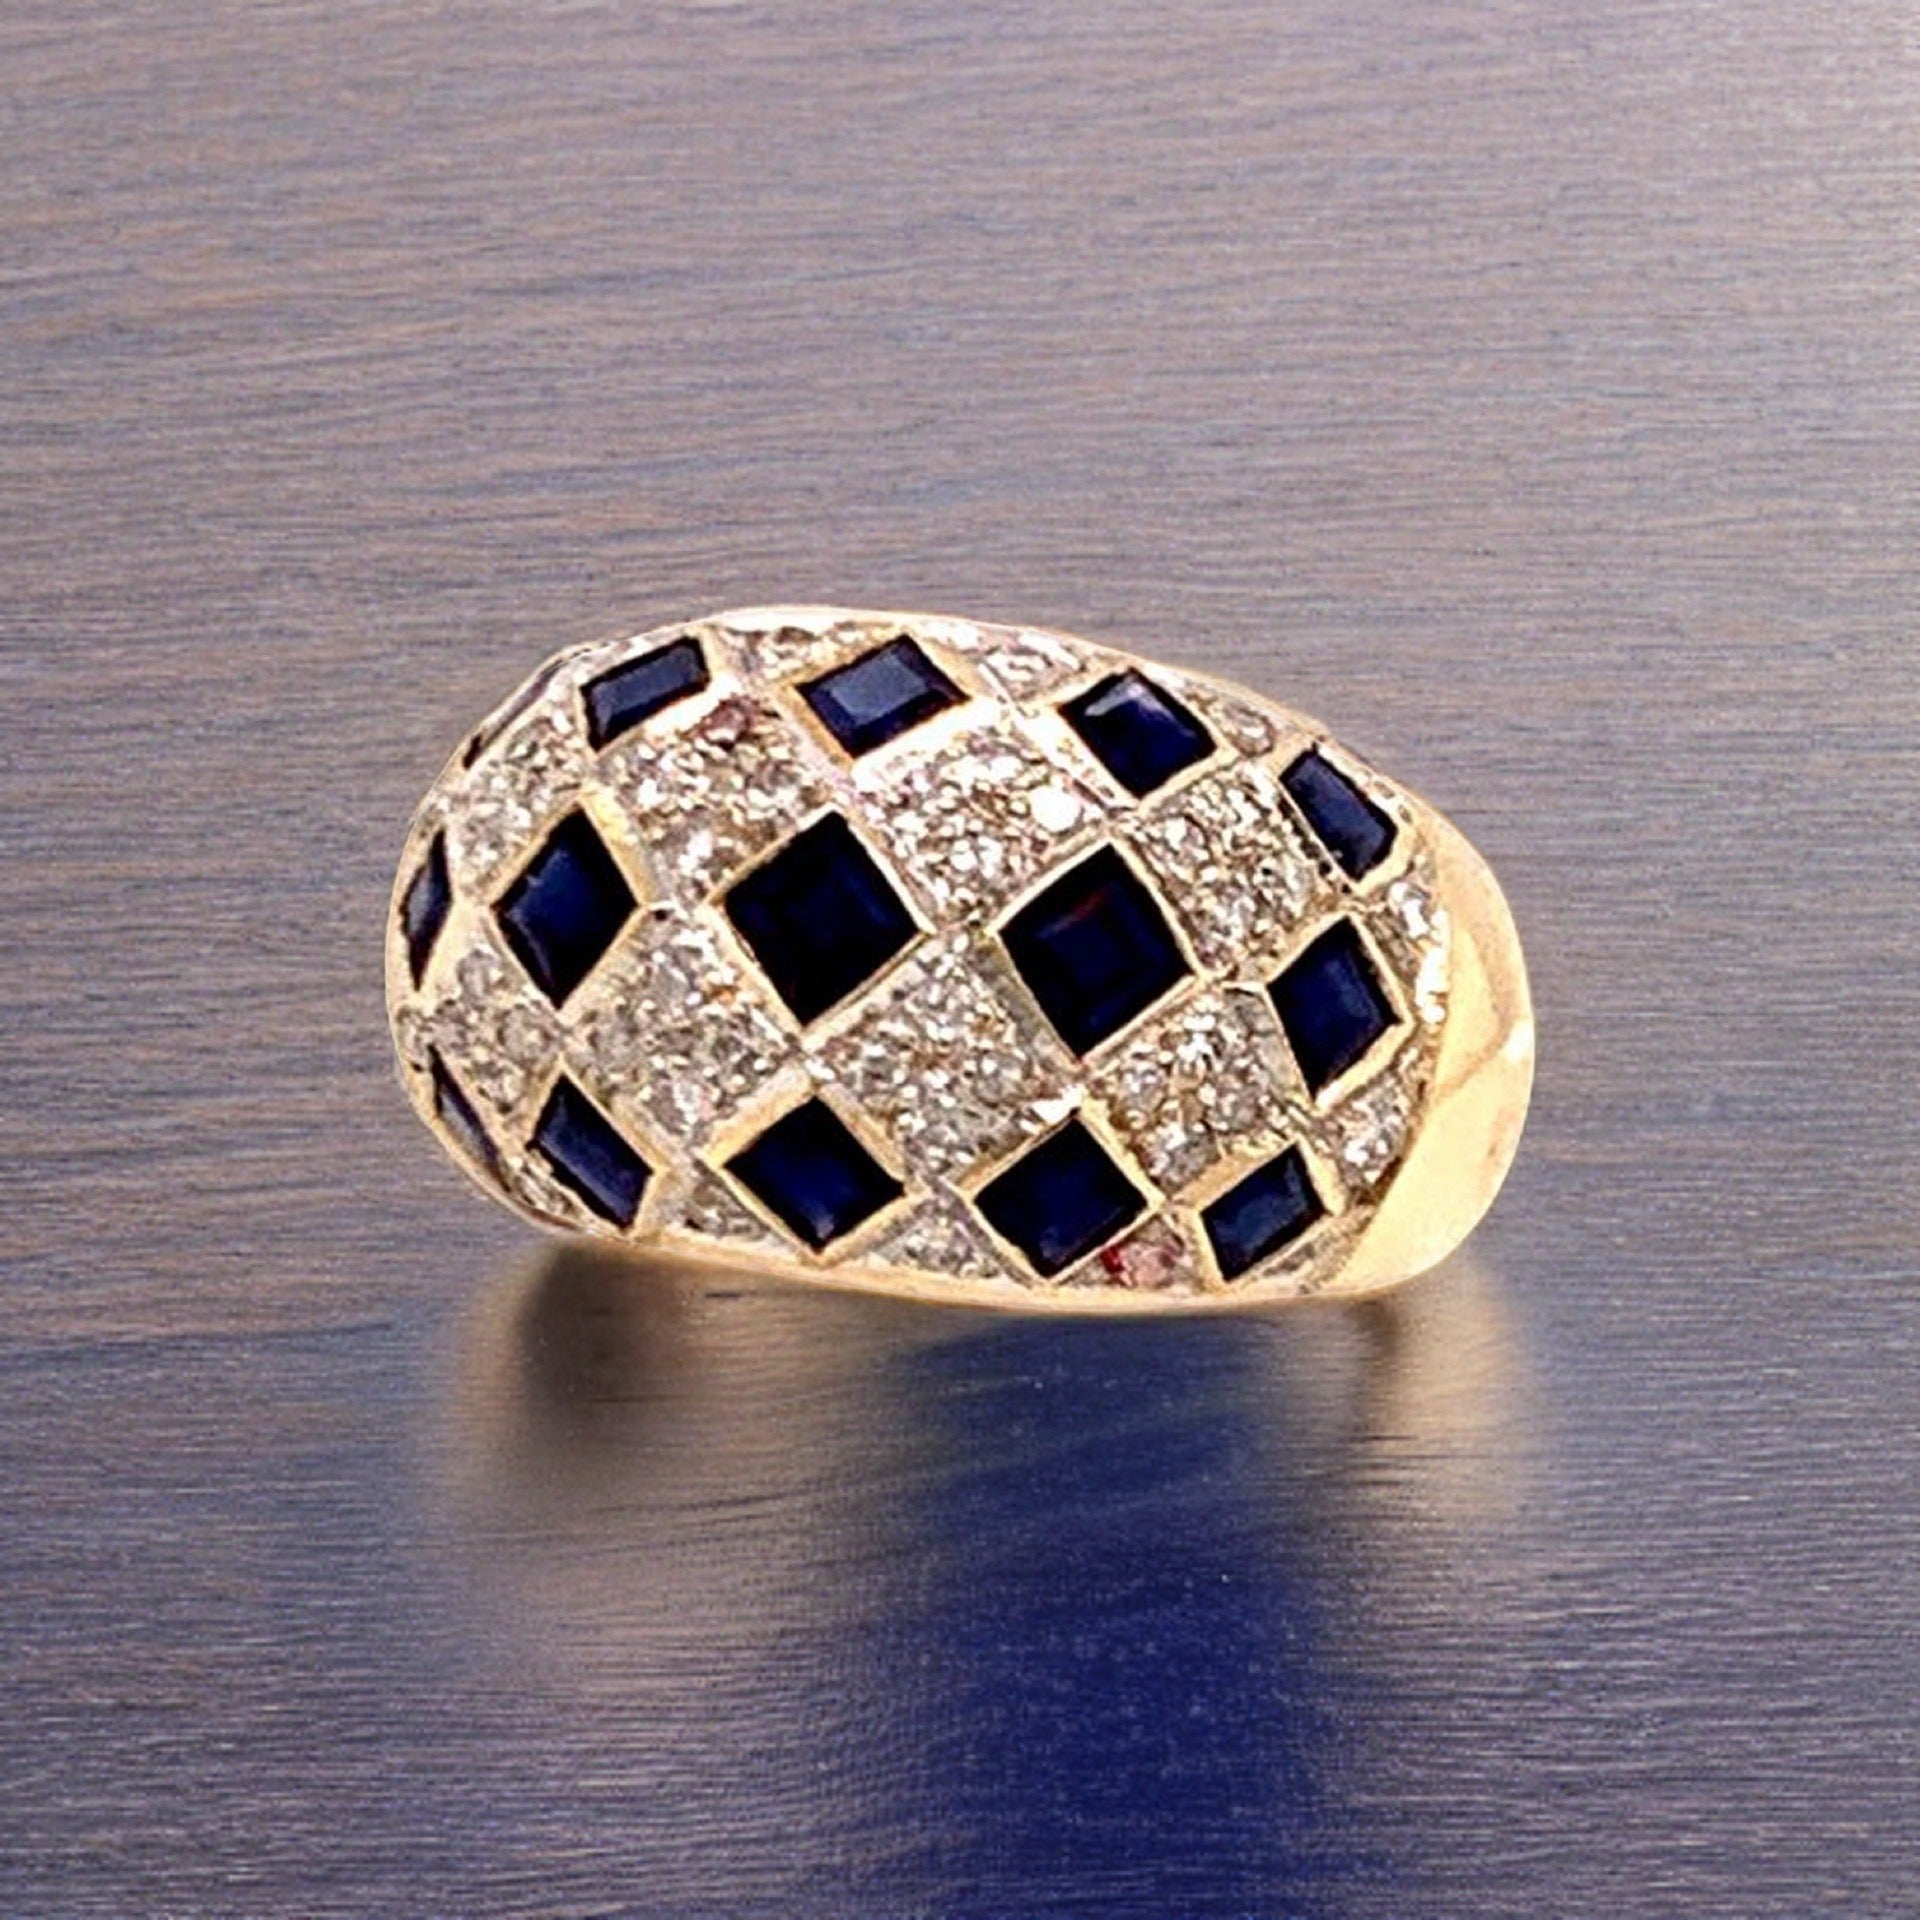 Diamond Sapphire Ring 14k Gold 2.14 TCW Checkerboard Certified $2,850 606974 - Certified Fine Jewelry